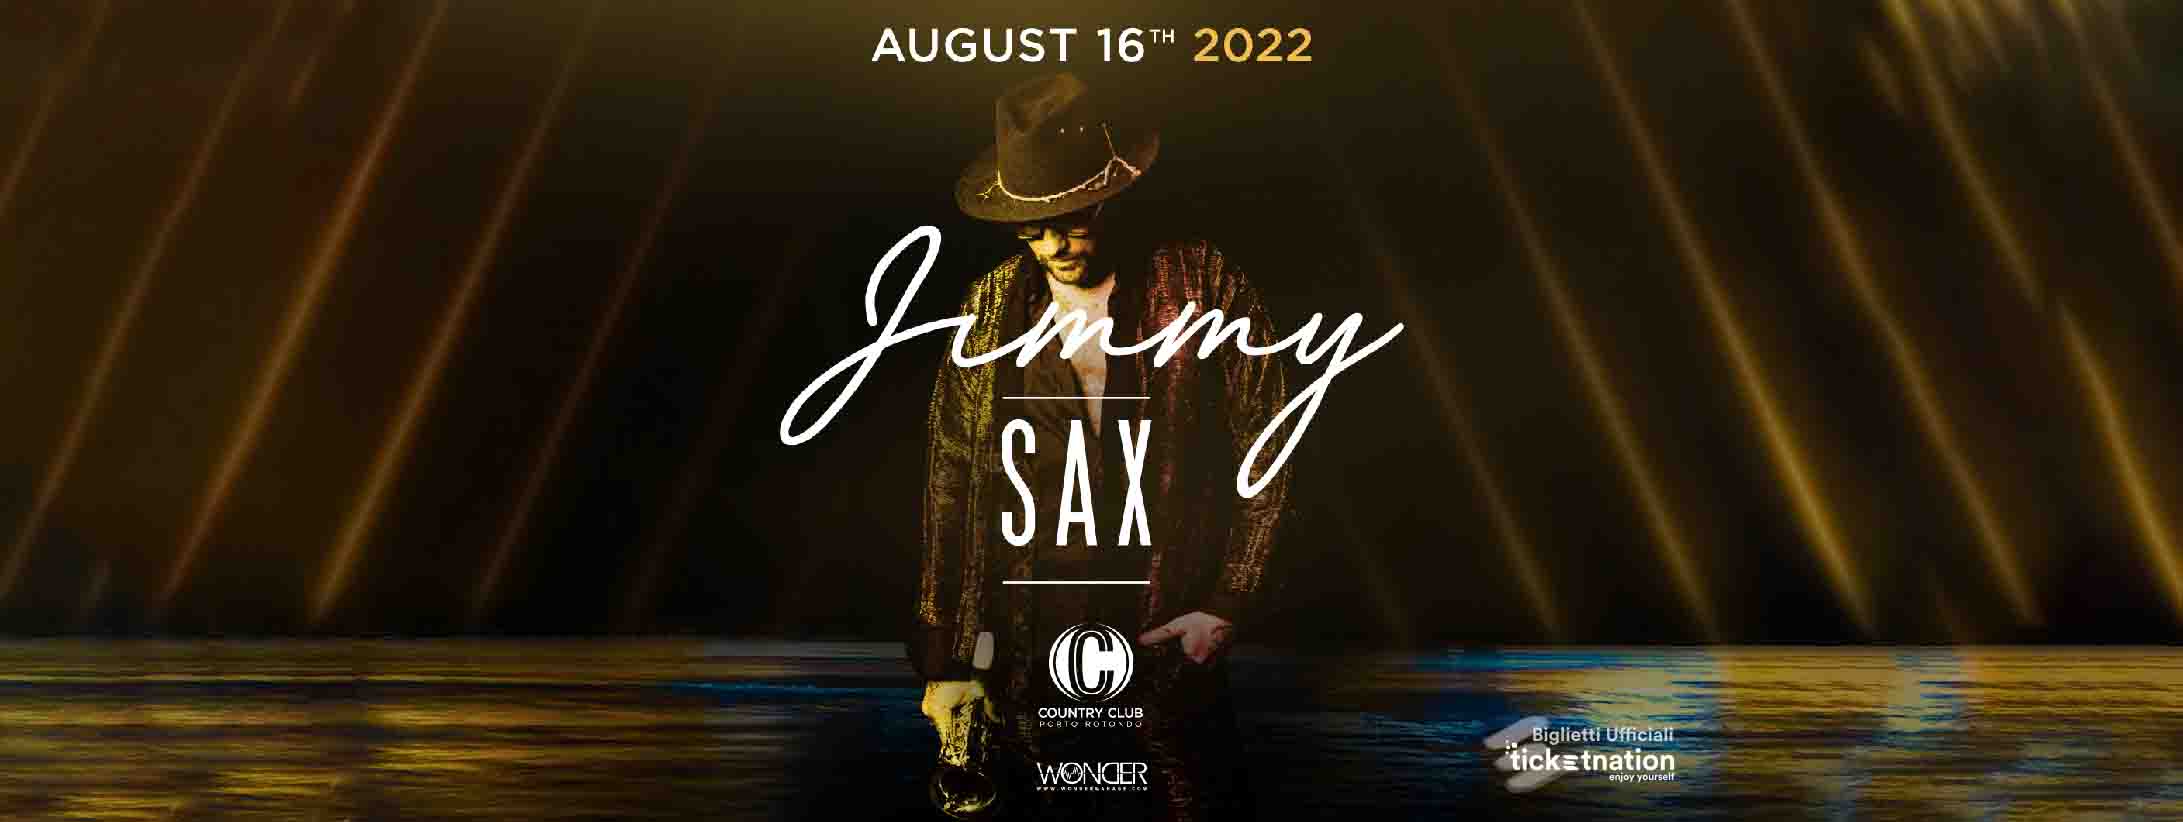 jimmy-sax-country-club-portorotondo-16-agosto-2022